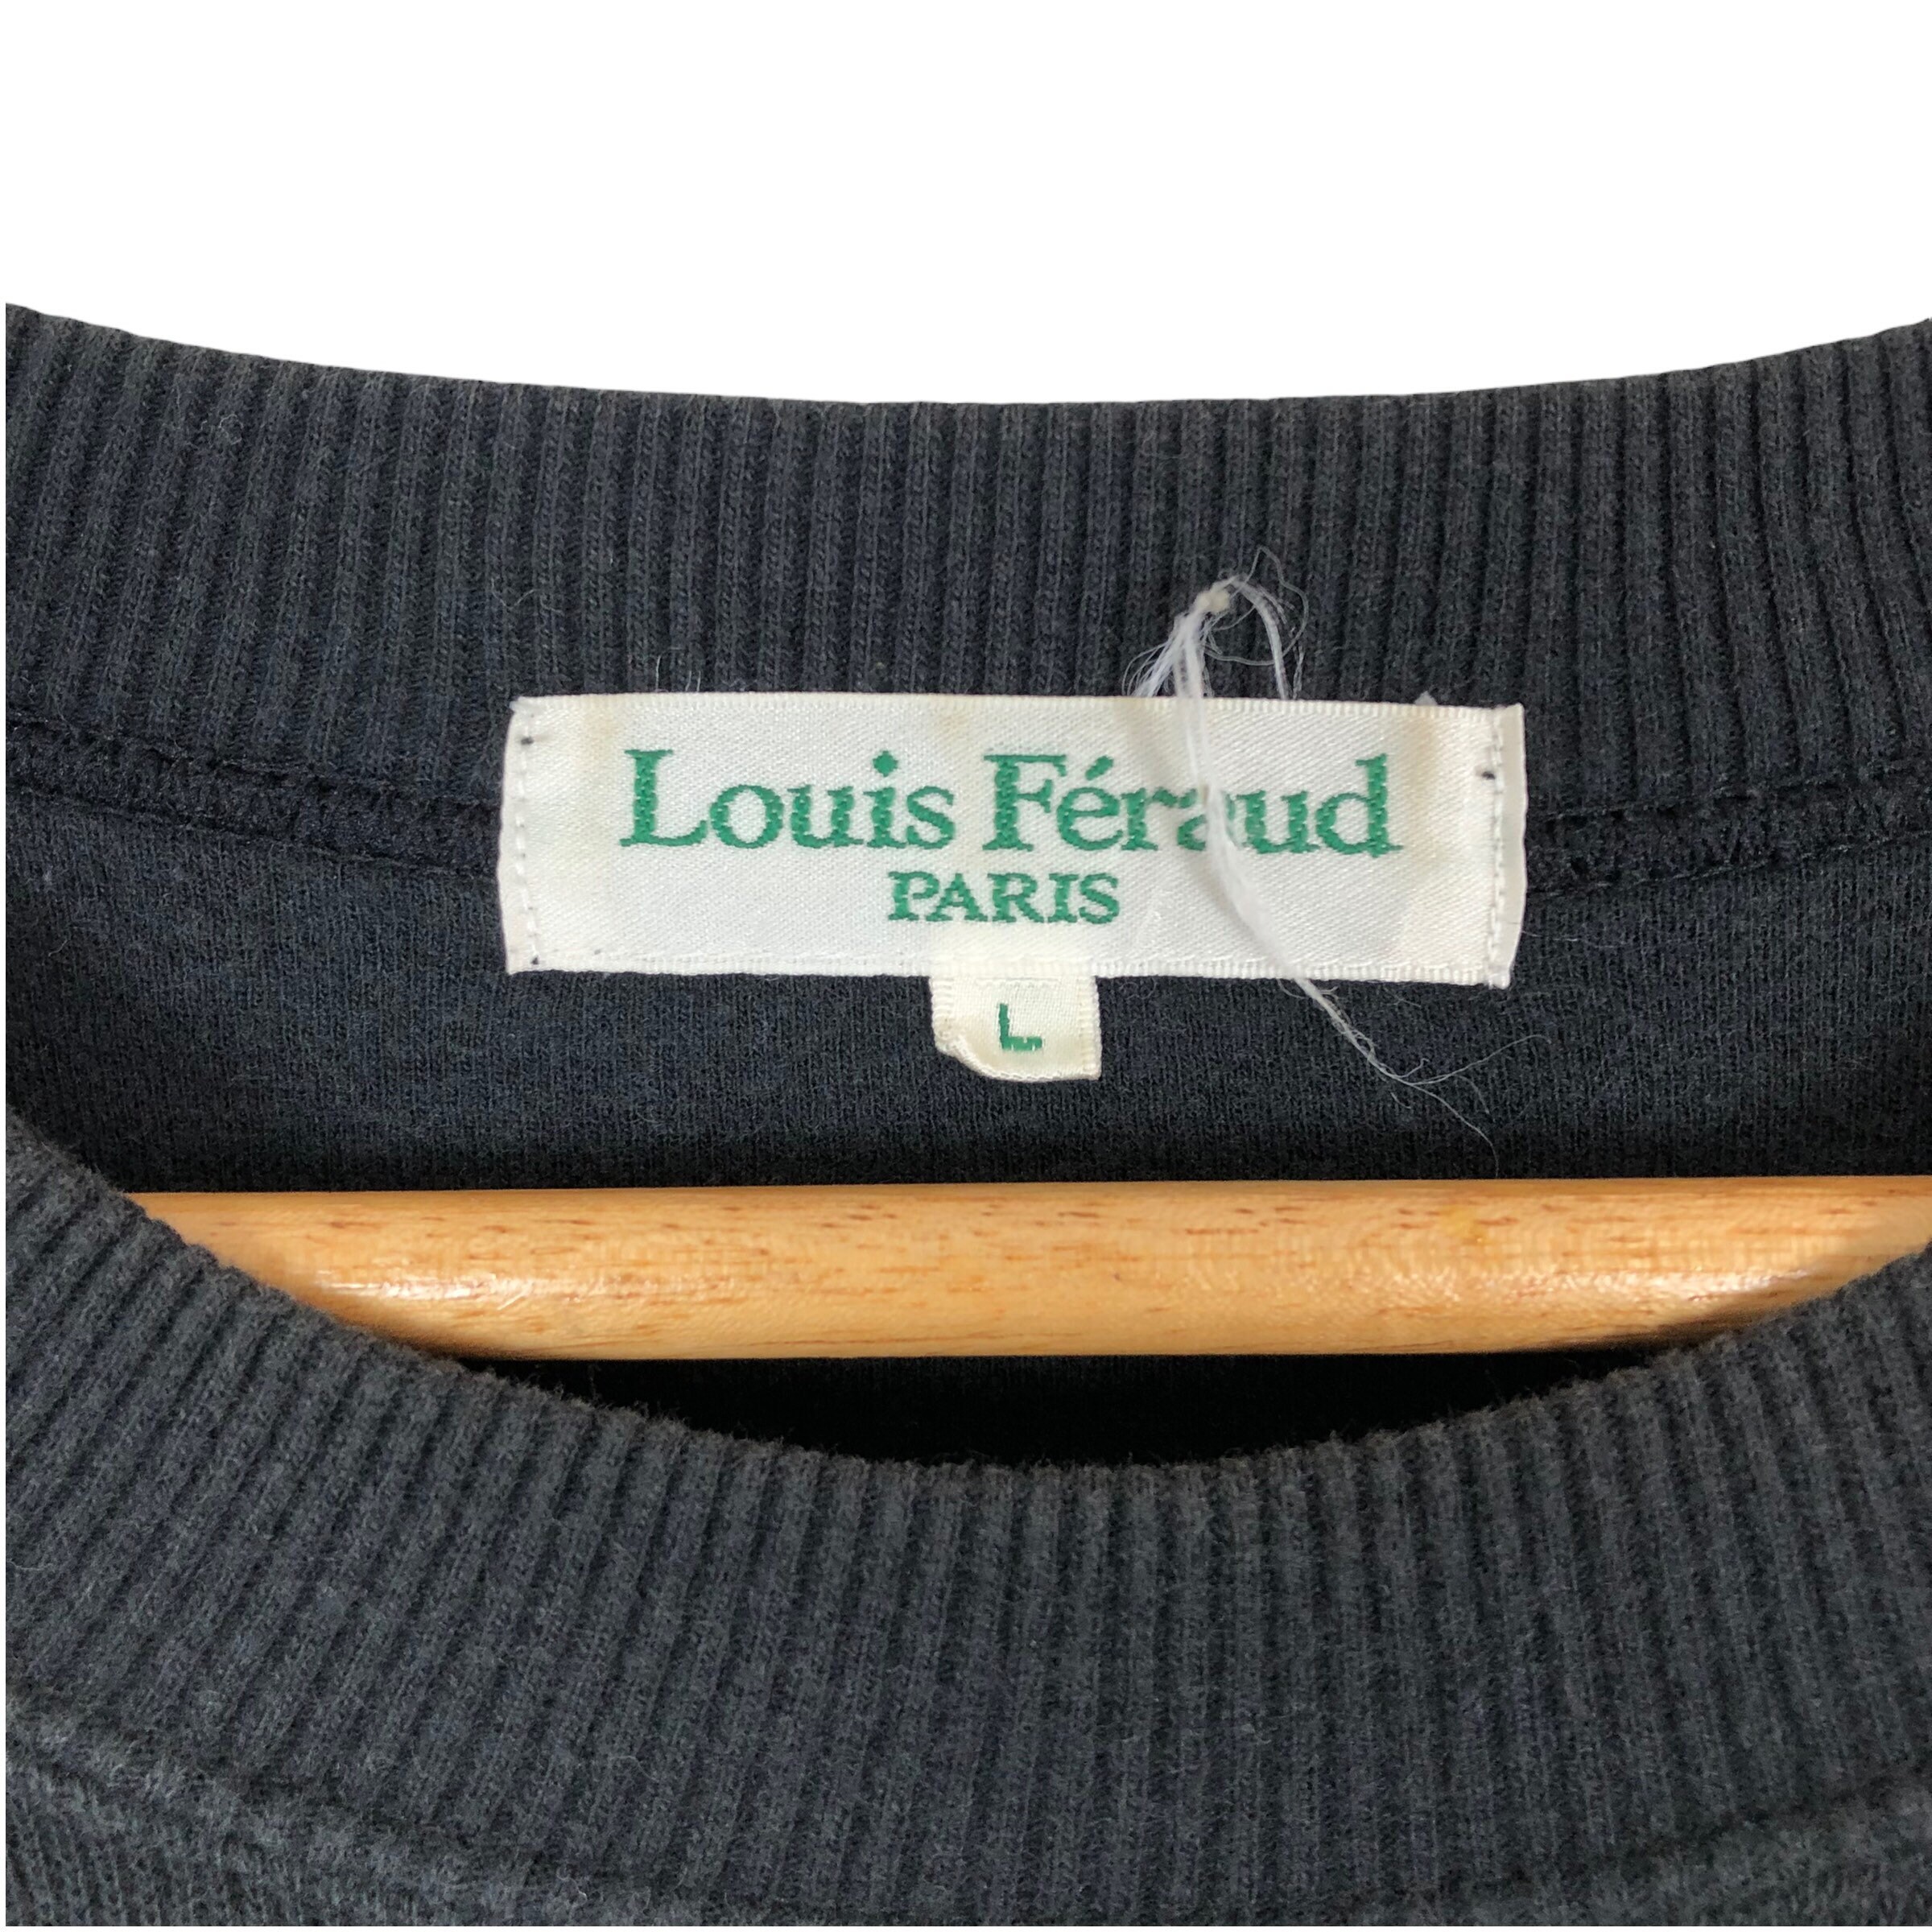 Buy Vintage Louis Féraud Paris Crewneck Sweatshirt Pullover Big Online in  India 